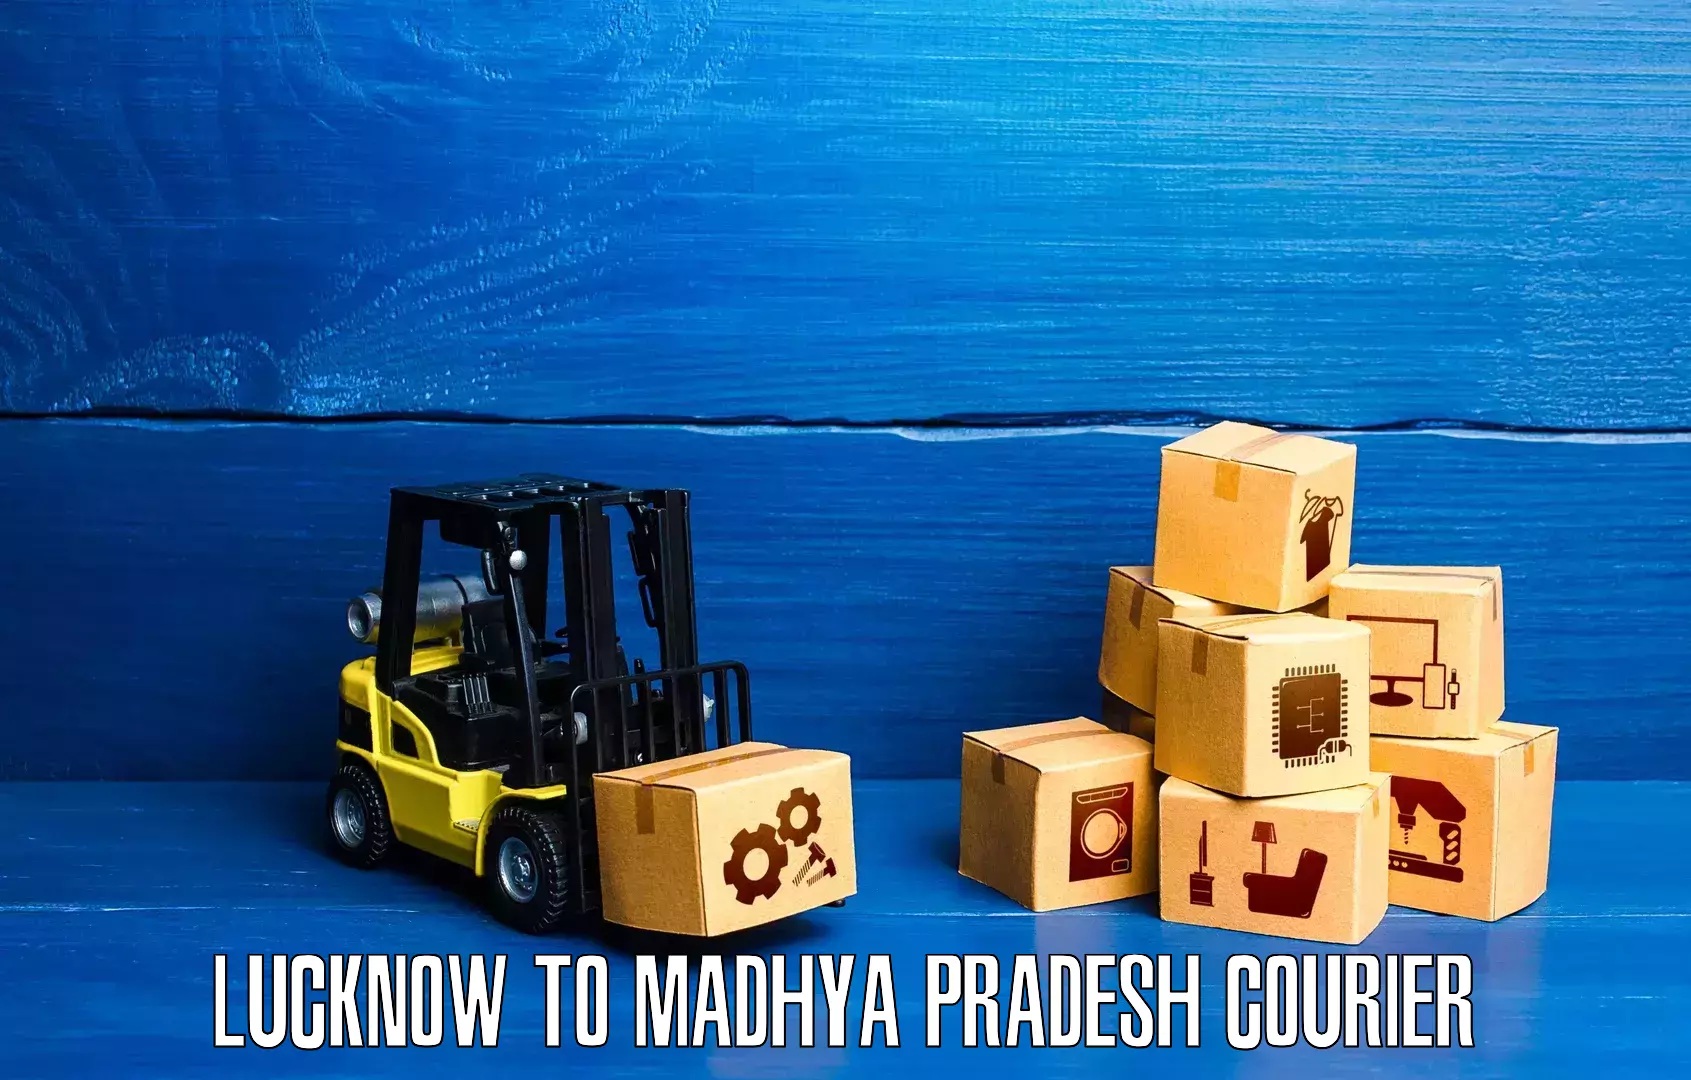 Courier service comparison Lucknow to Madhya Pradesh